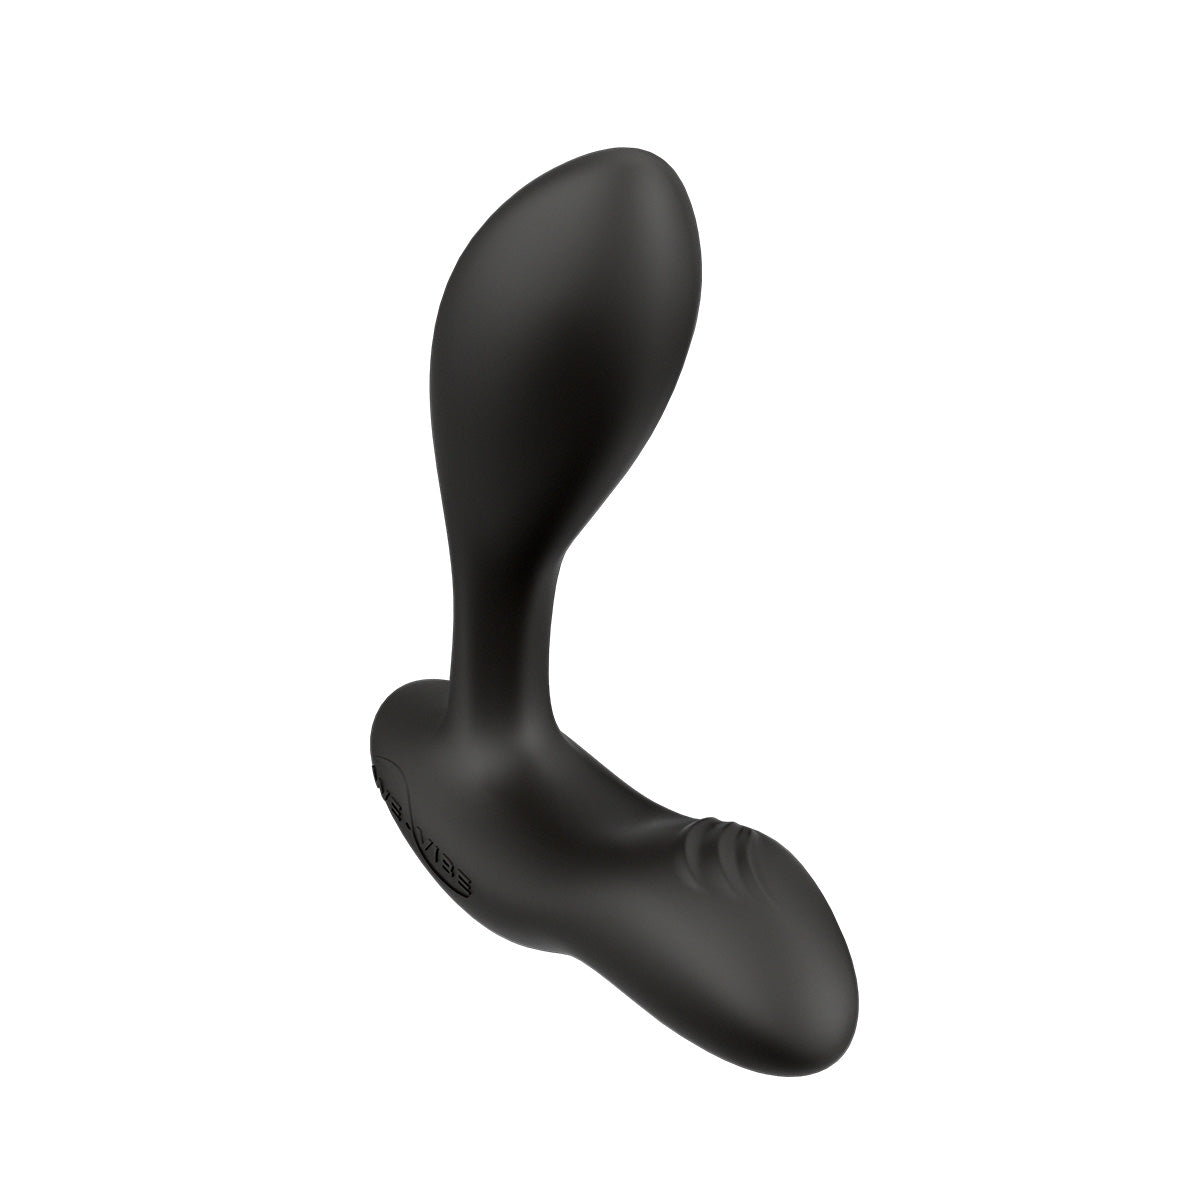 We-Vibe Vector+ - Vibrating Prostate Massager – Charcoal Black